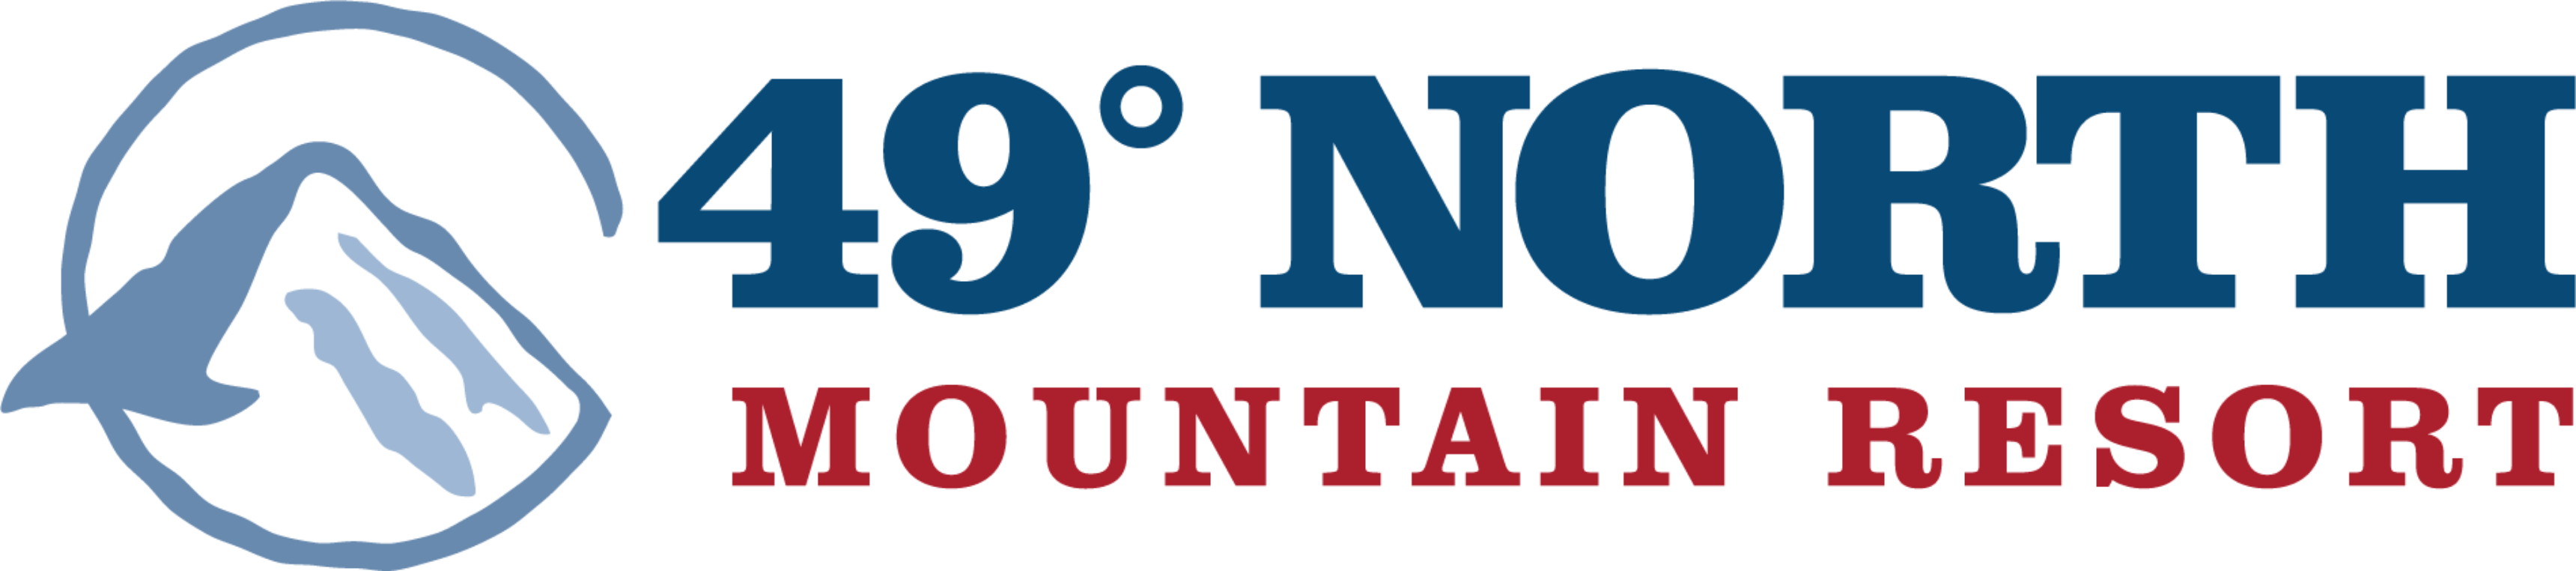 49° North Mountain Resort logo